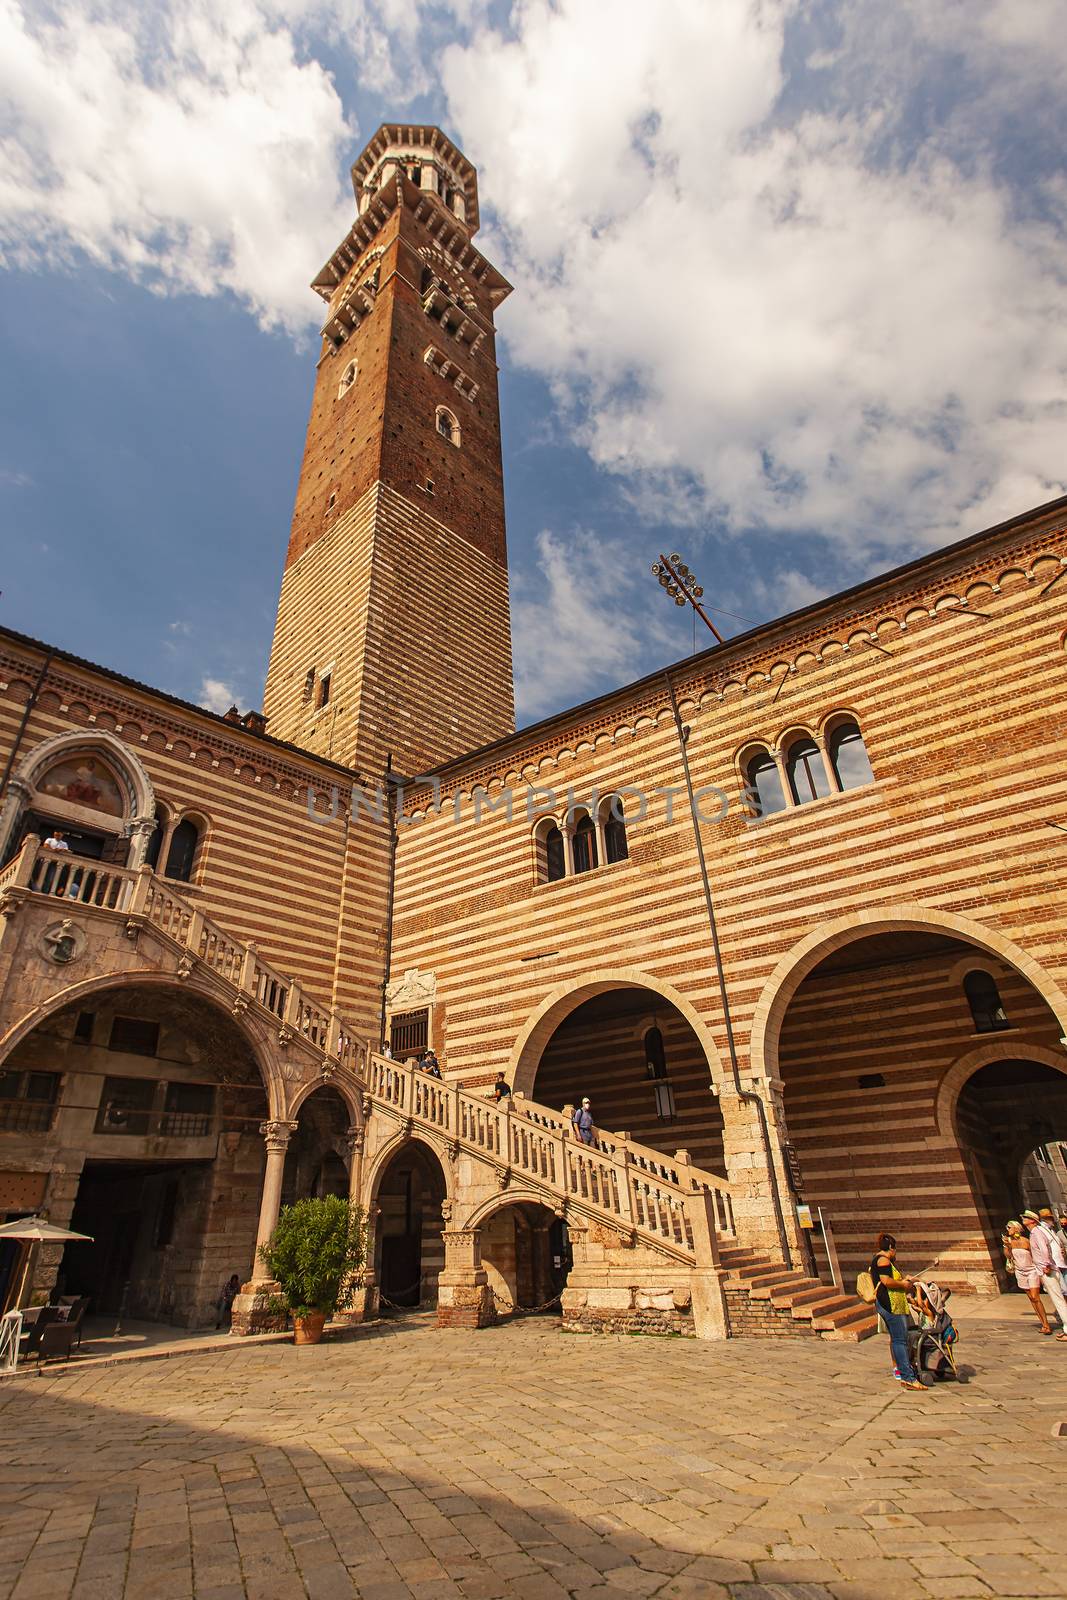 Palazzo della Regione with staircase in Verona in Italy 3 by pippocarlot